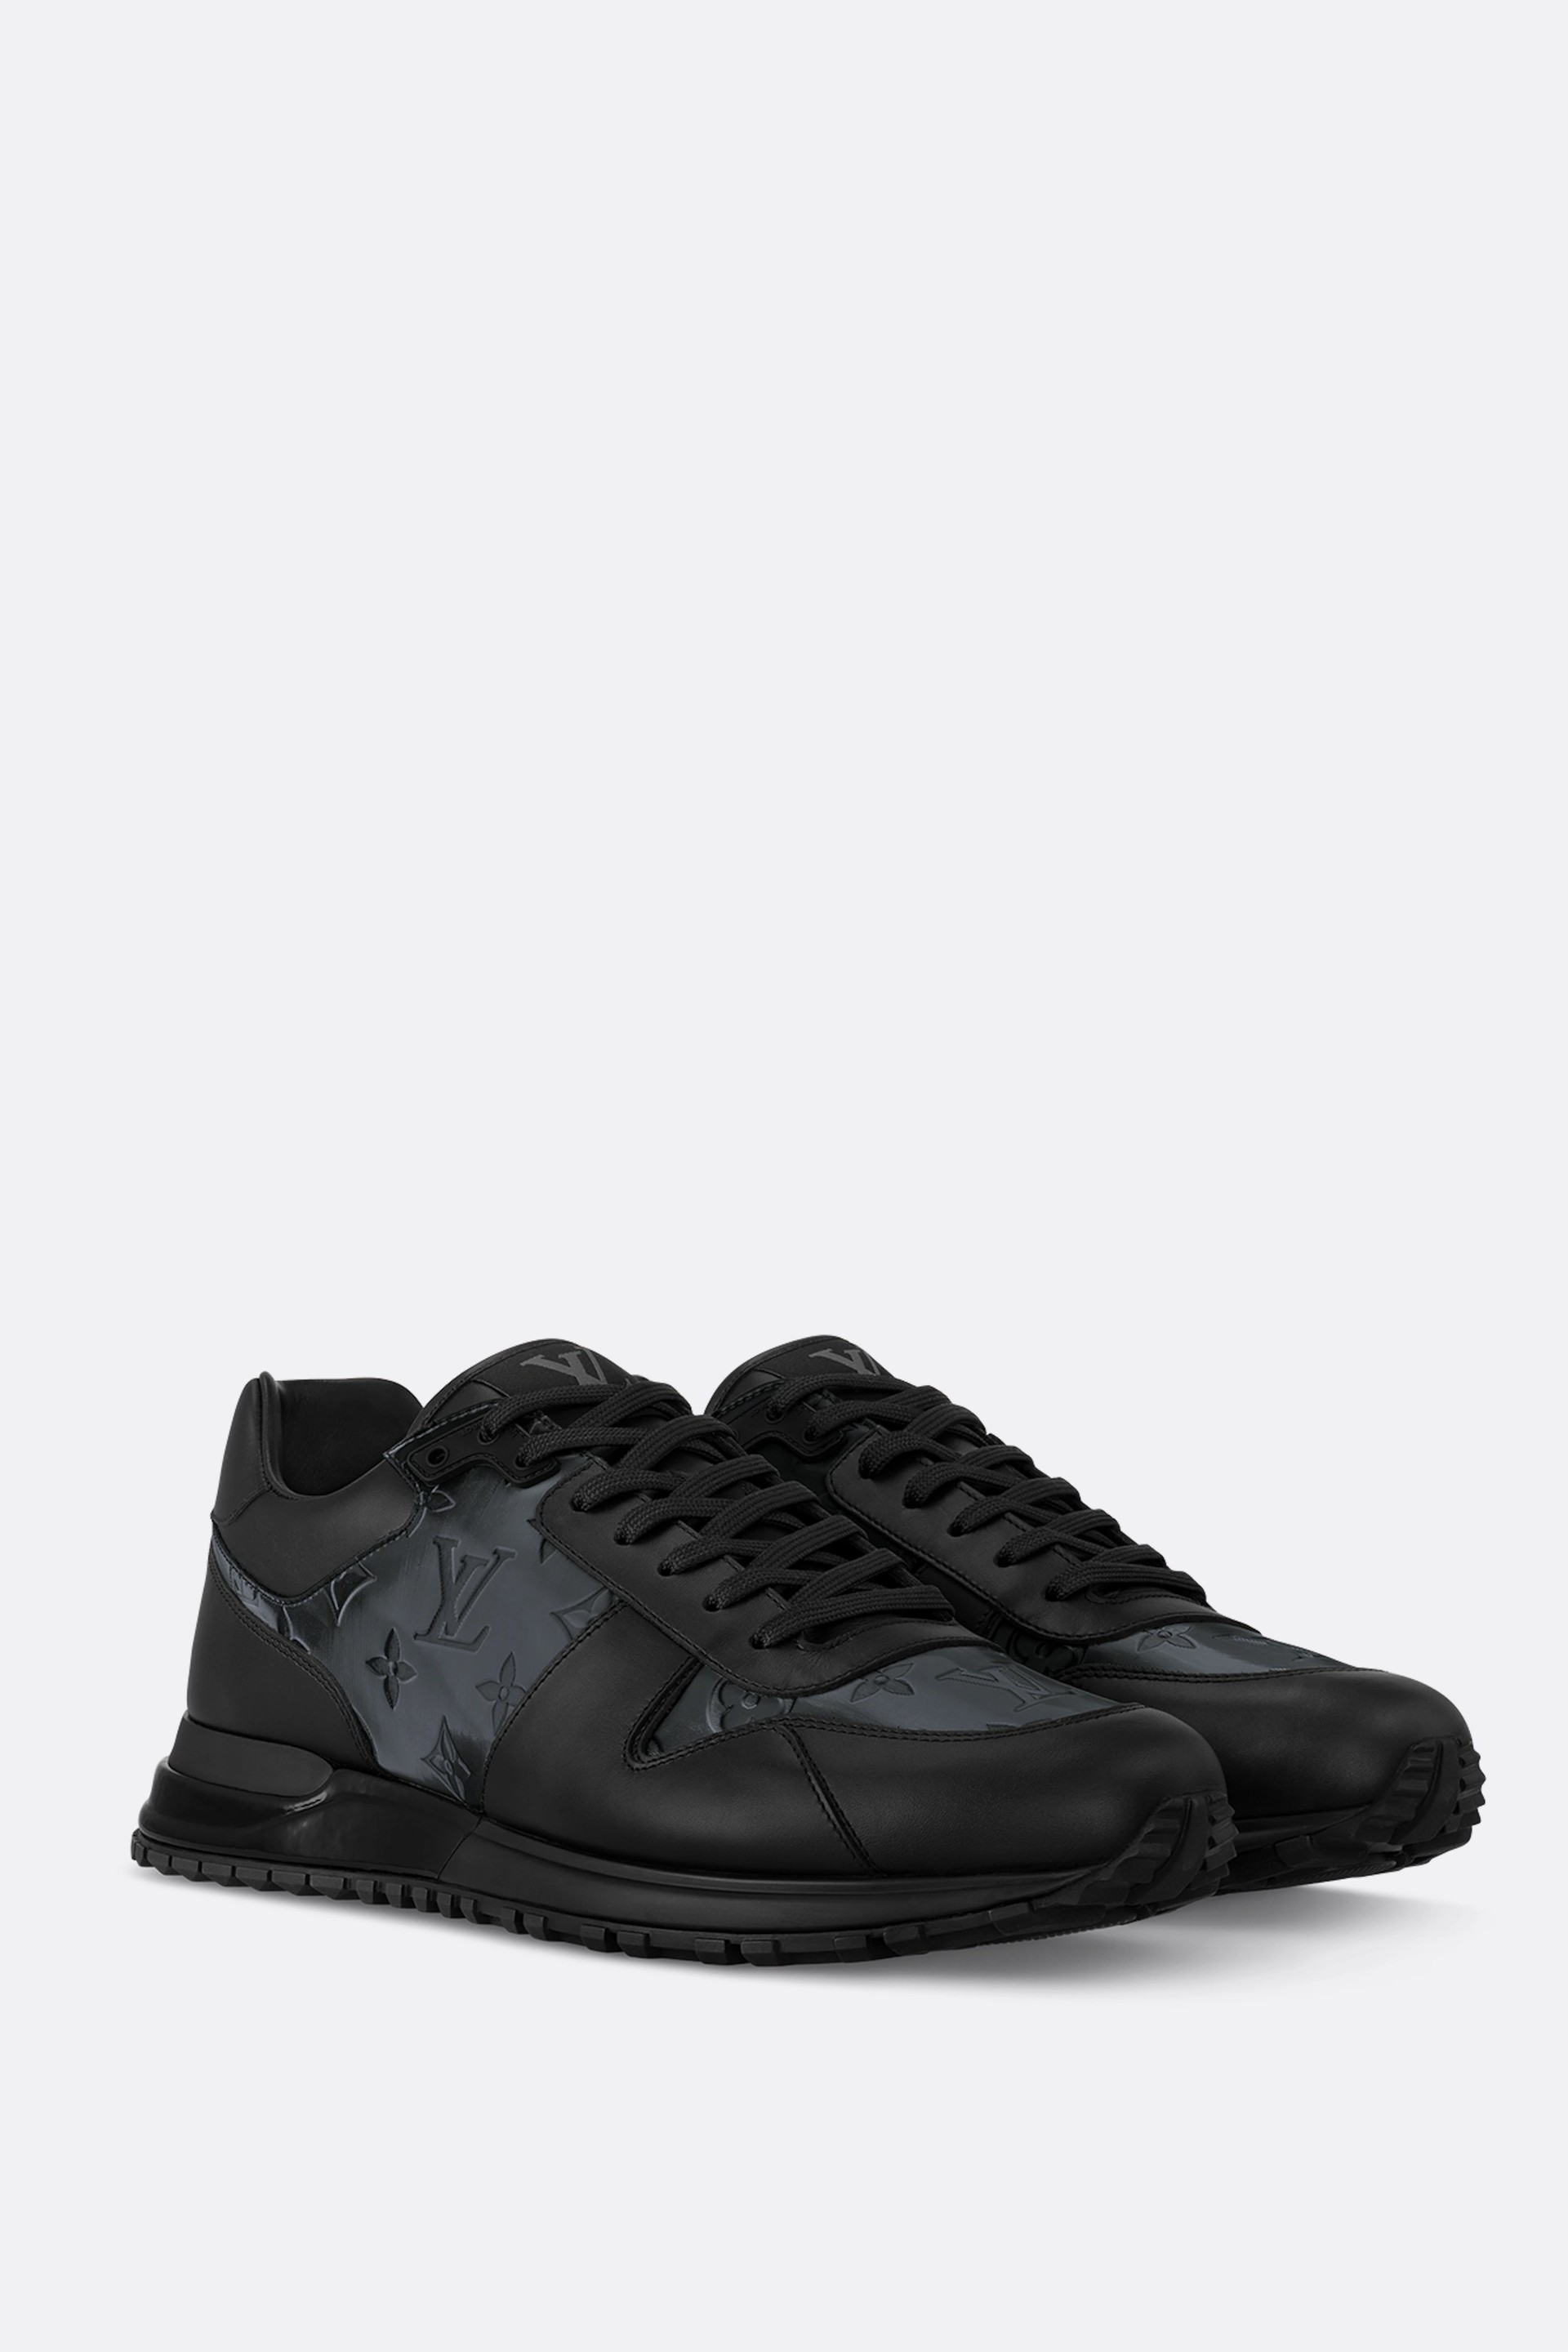 Louis Vuitton - Run Away Sneakers - Black